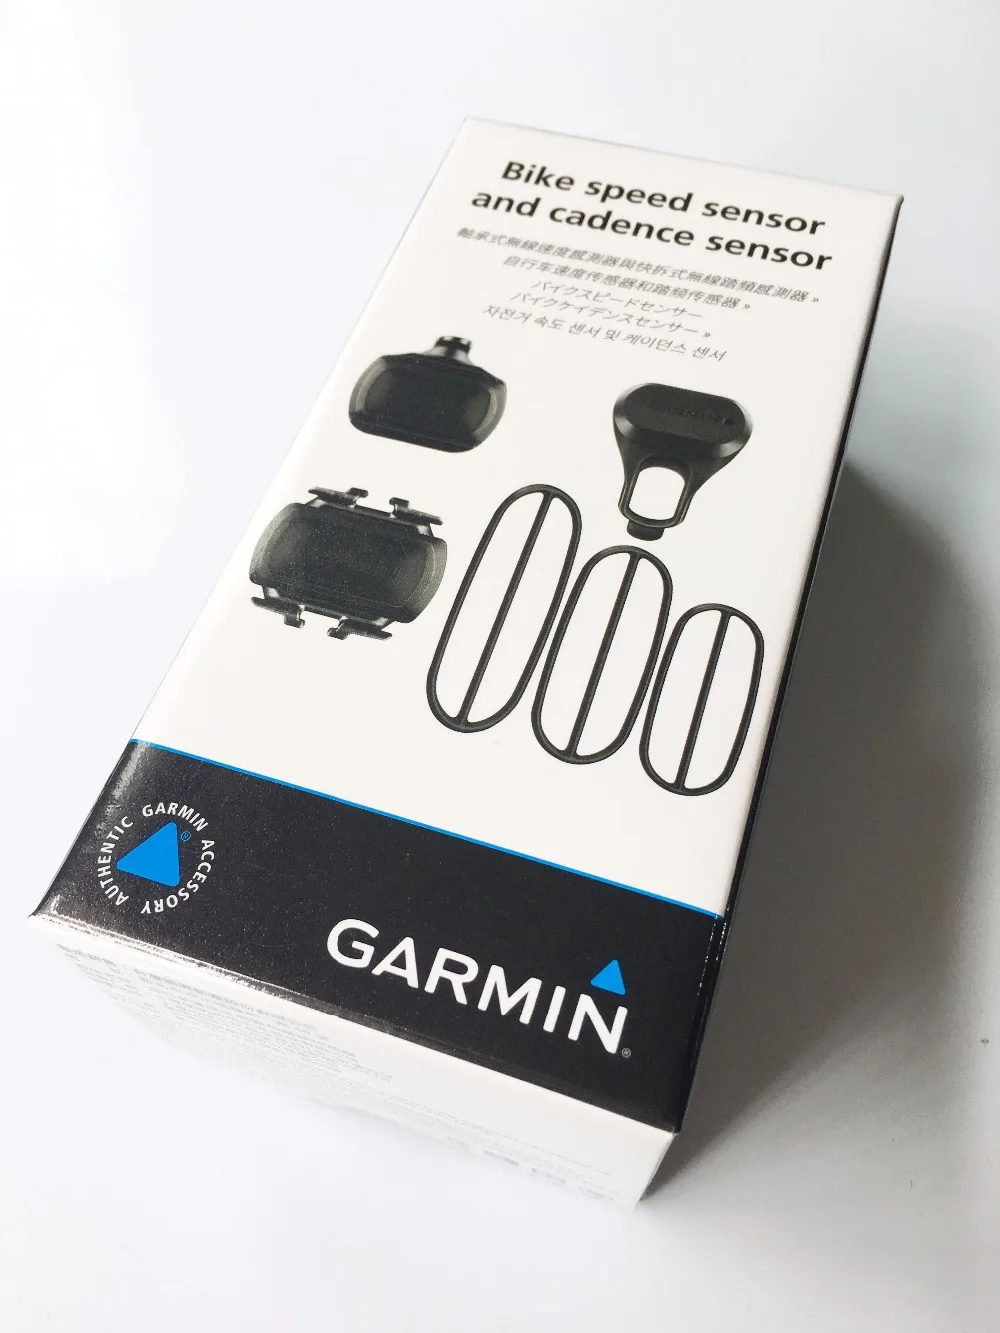 Garmin ANT+ Датчик частоты вращения велосипеда для велосипеда Edge 510 810 fenix2 910XT oregon Forerunner 920XT запчасти для велосипеда